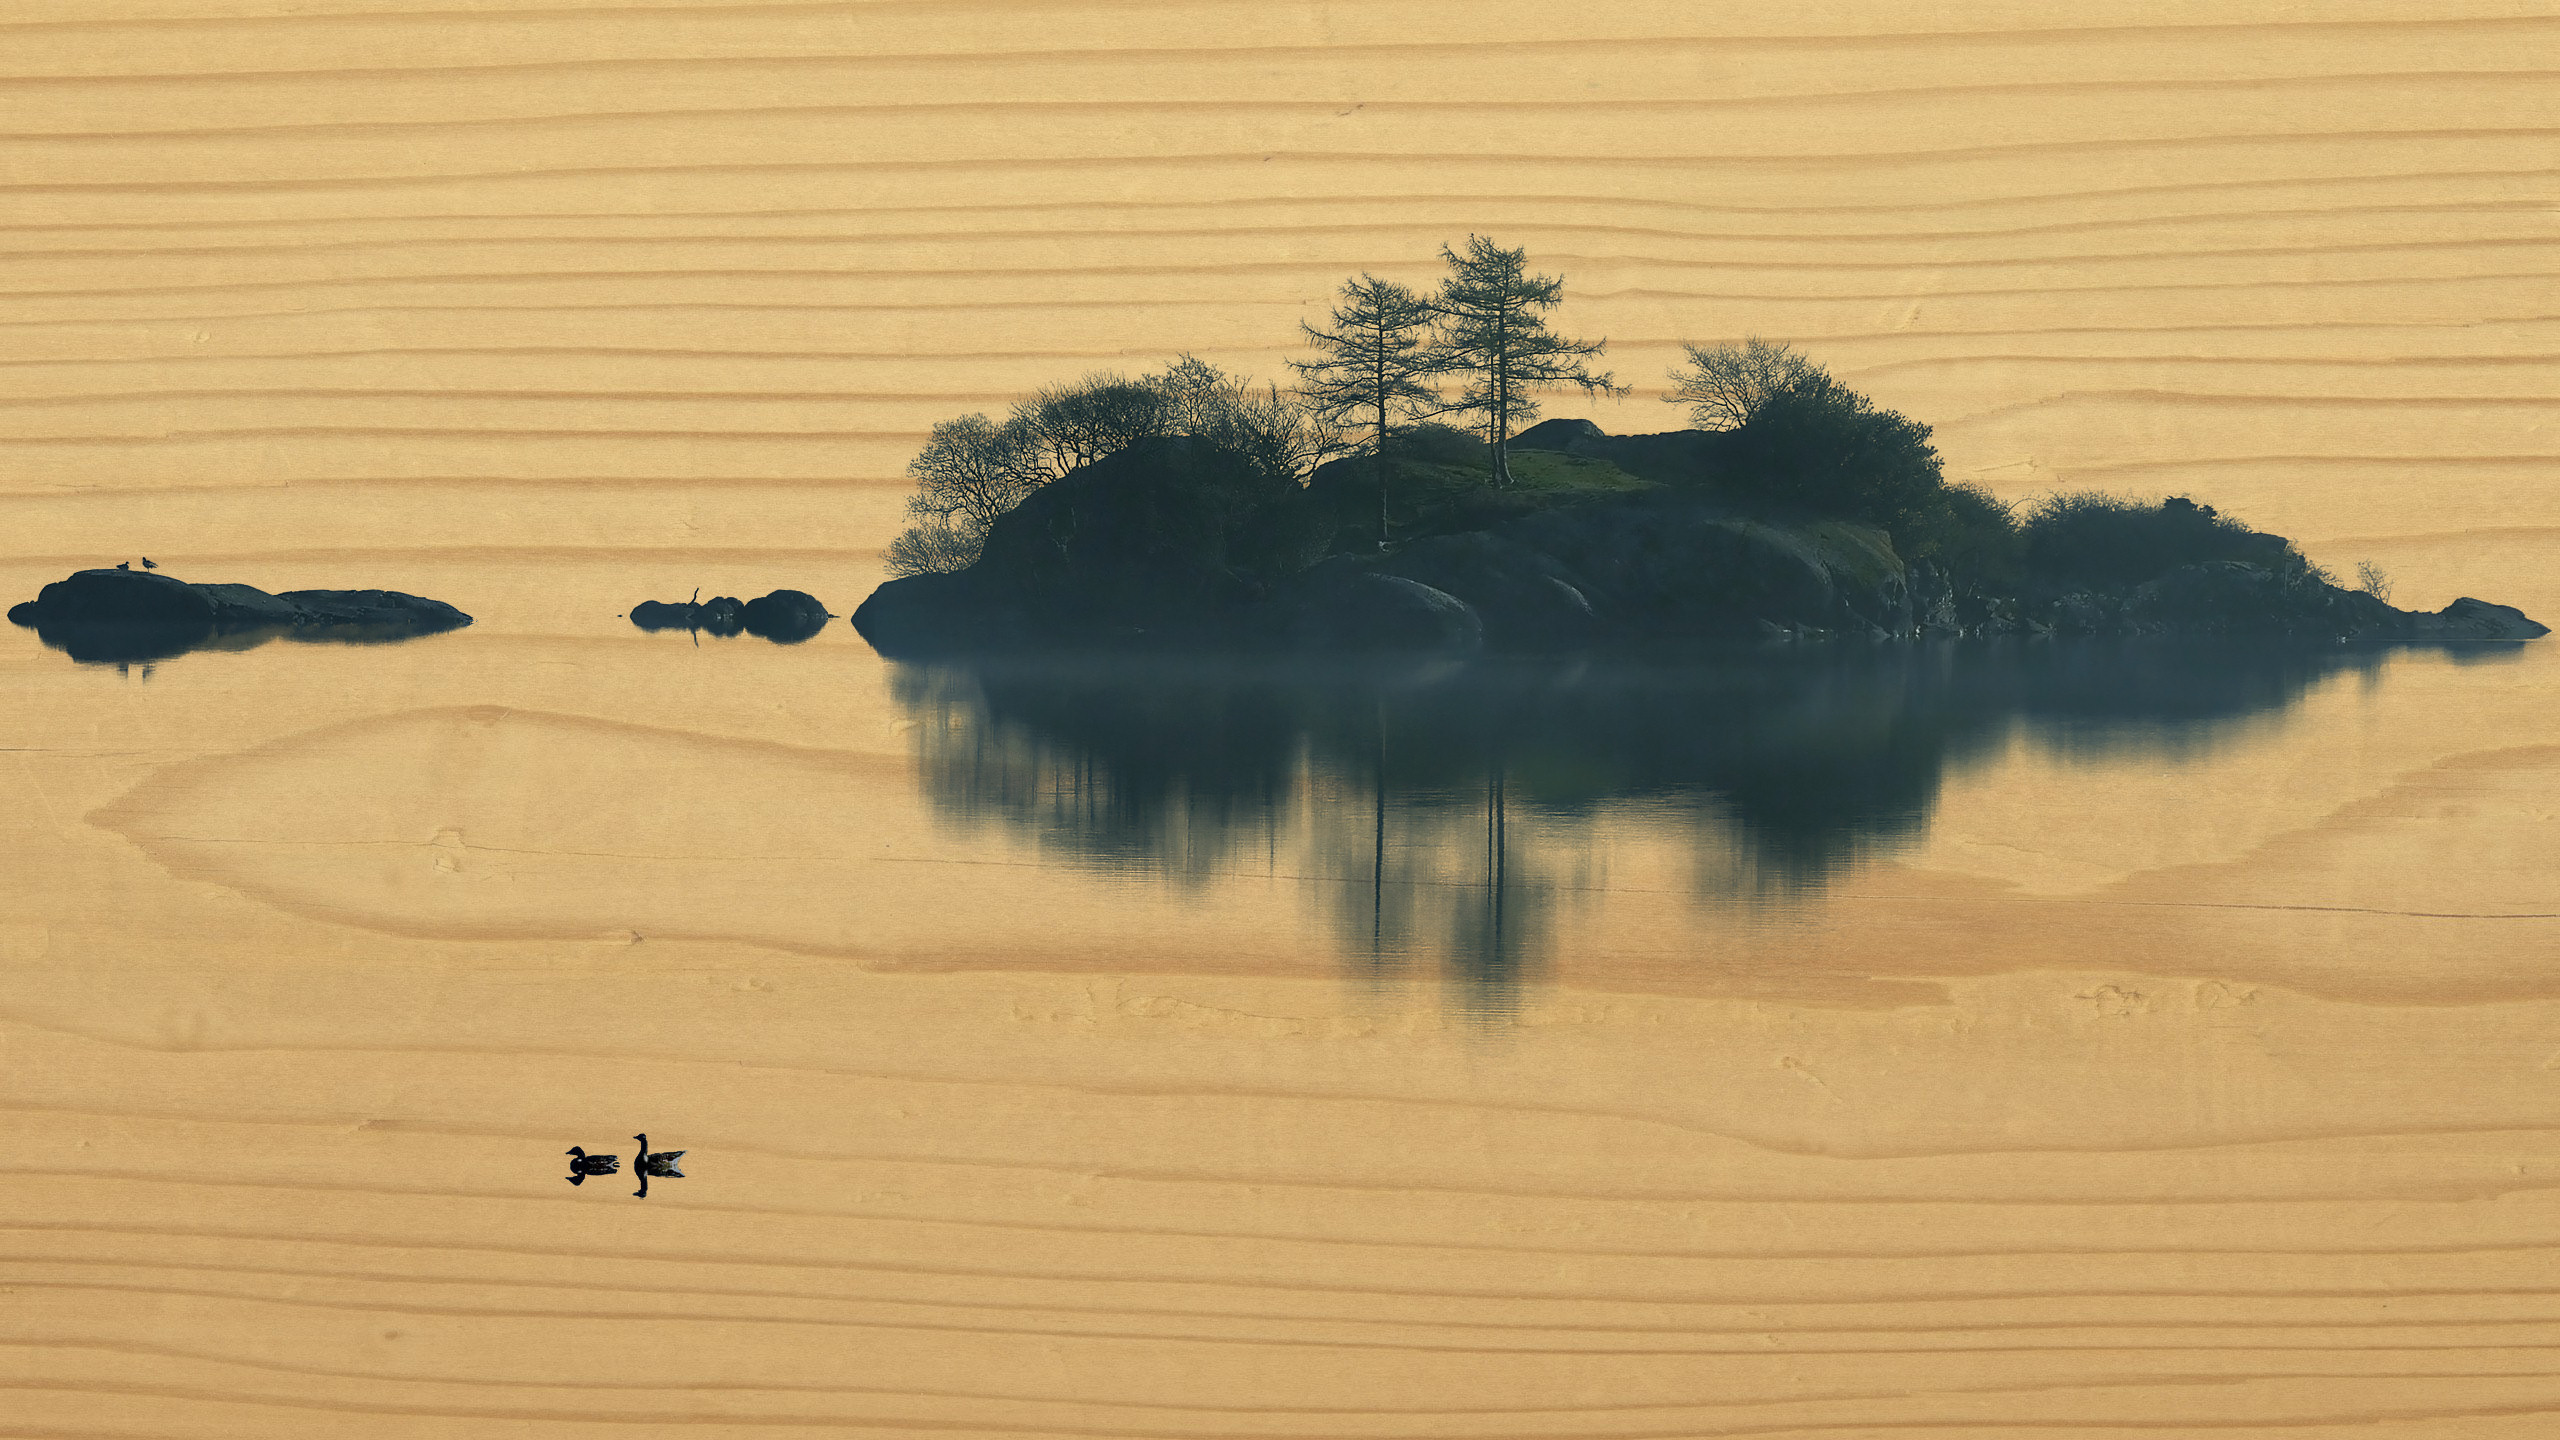 wooden_Island_in_the_mist_2560x1440.jpg